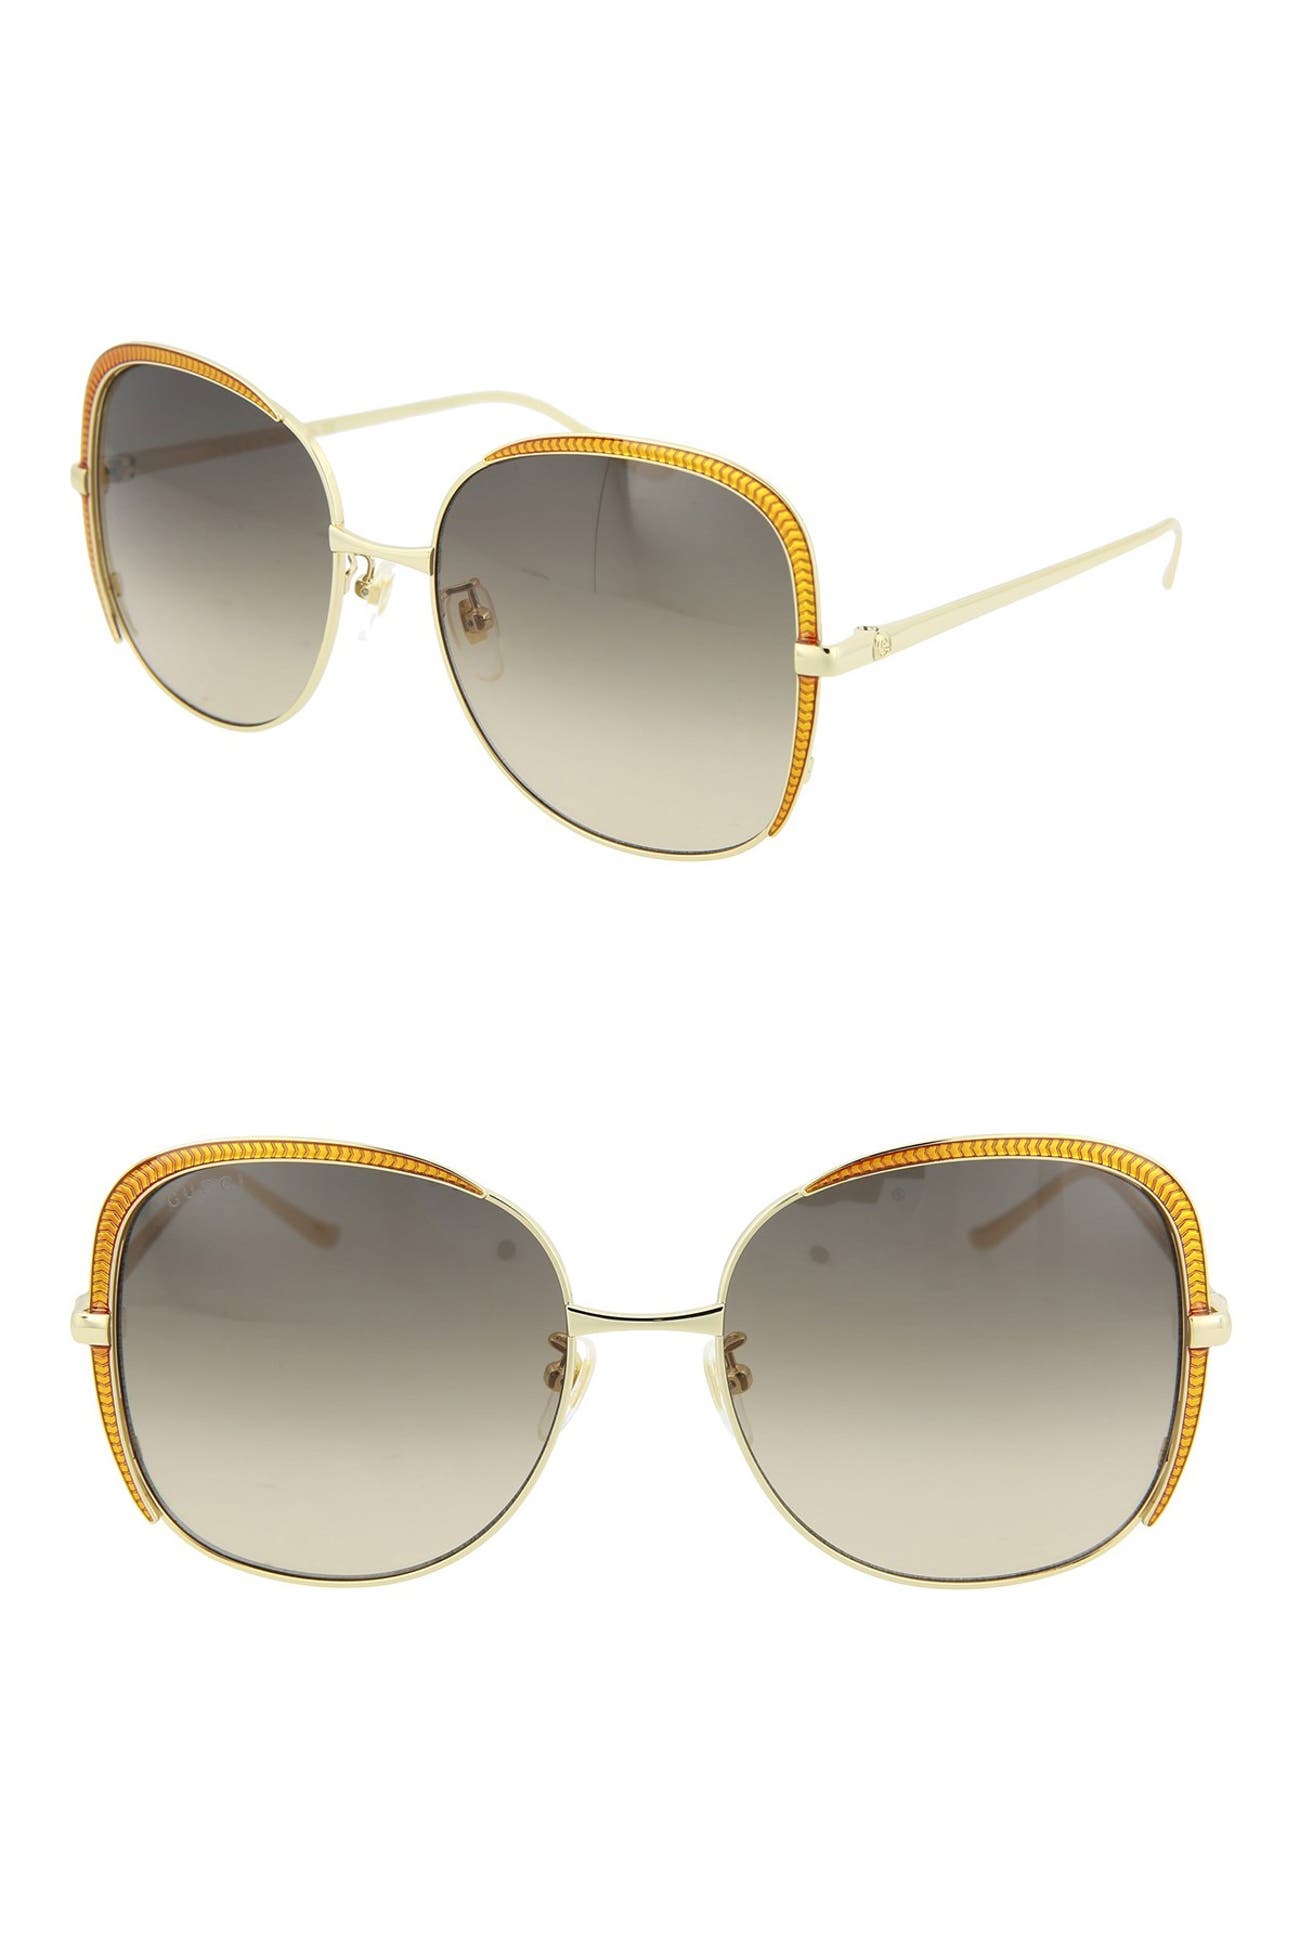 Gucci 58mm Square Sunglasses Nordstrom Rack